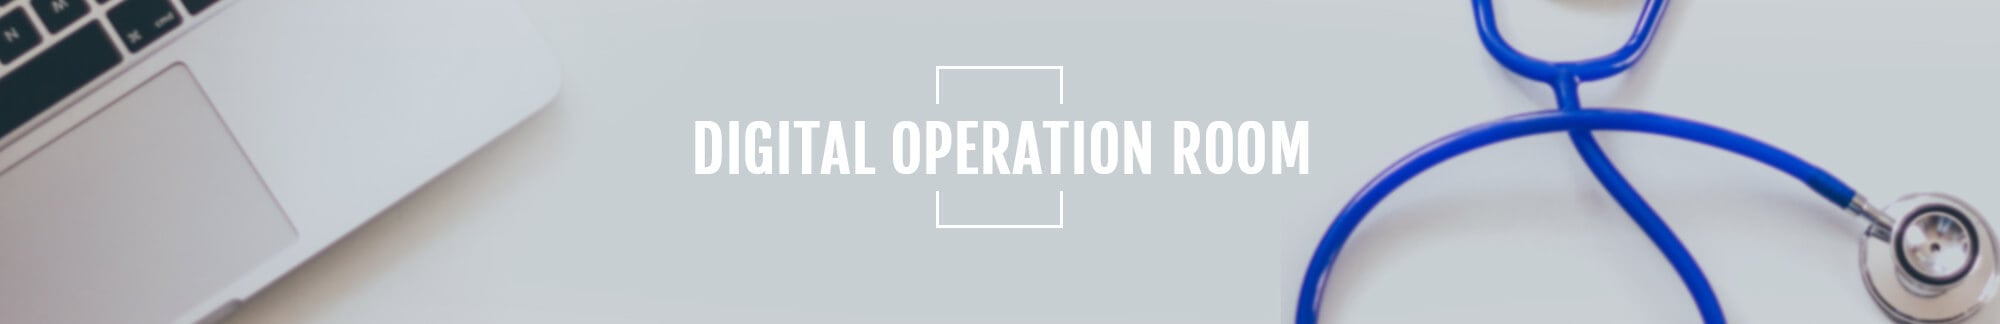 Digital Operation Room